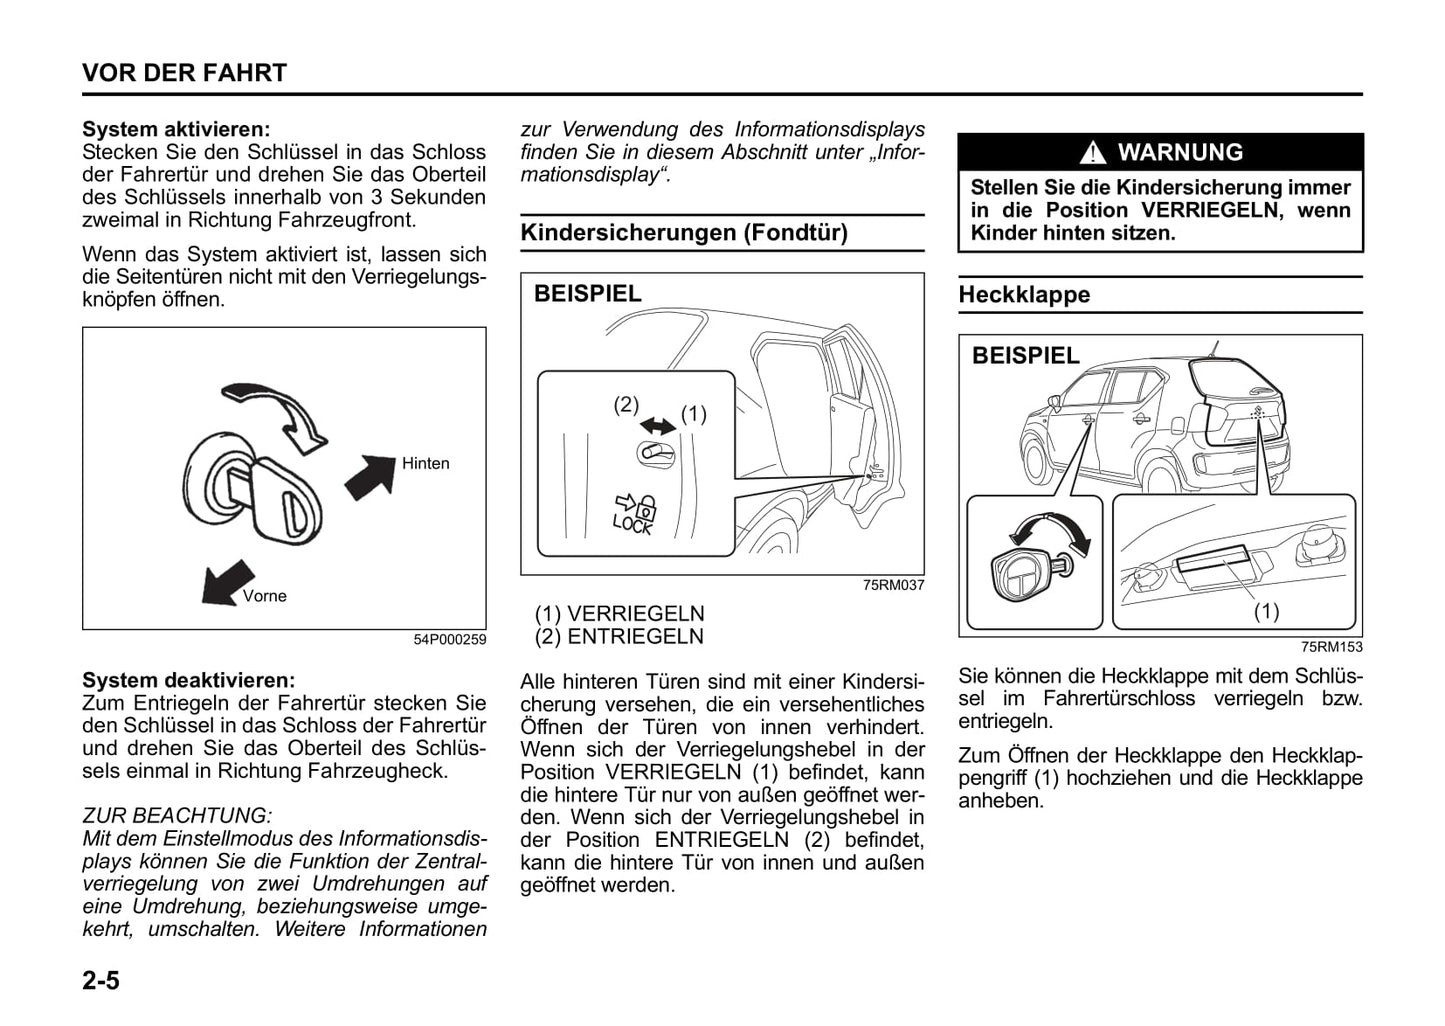 2016-2017 Suzuki Ignis Owner's Manual | German